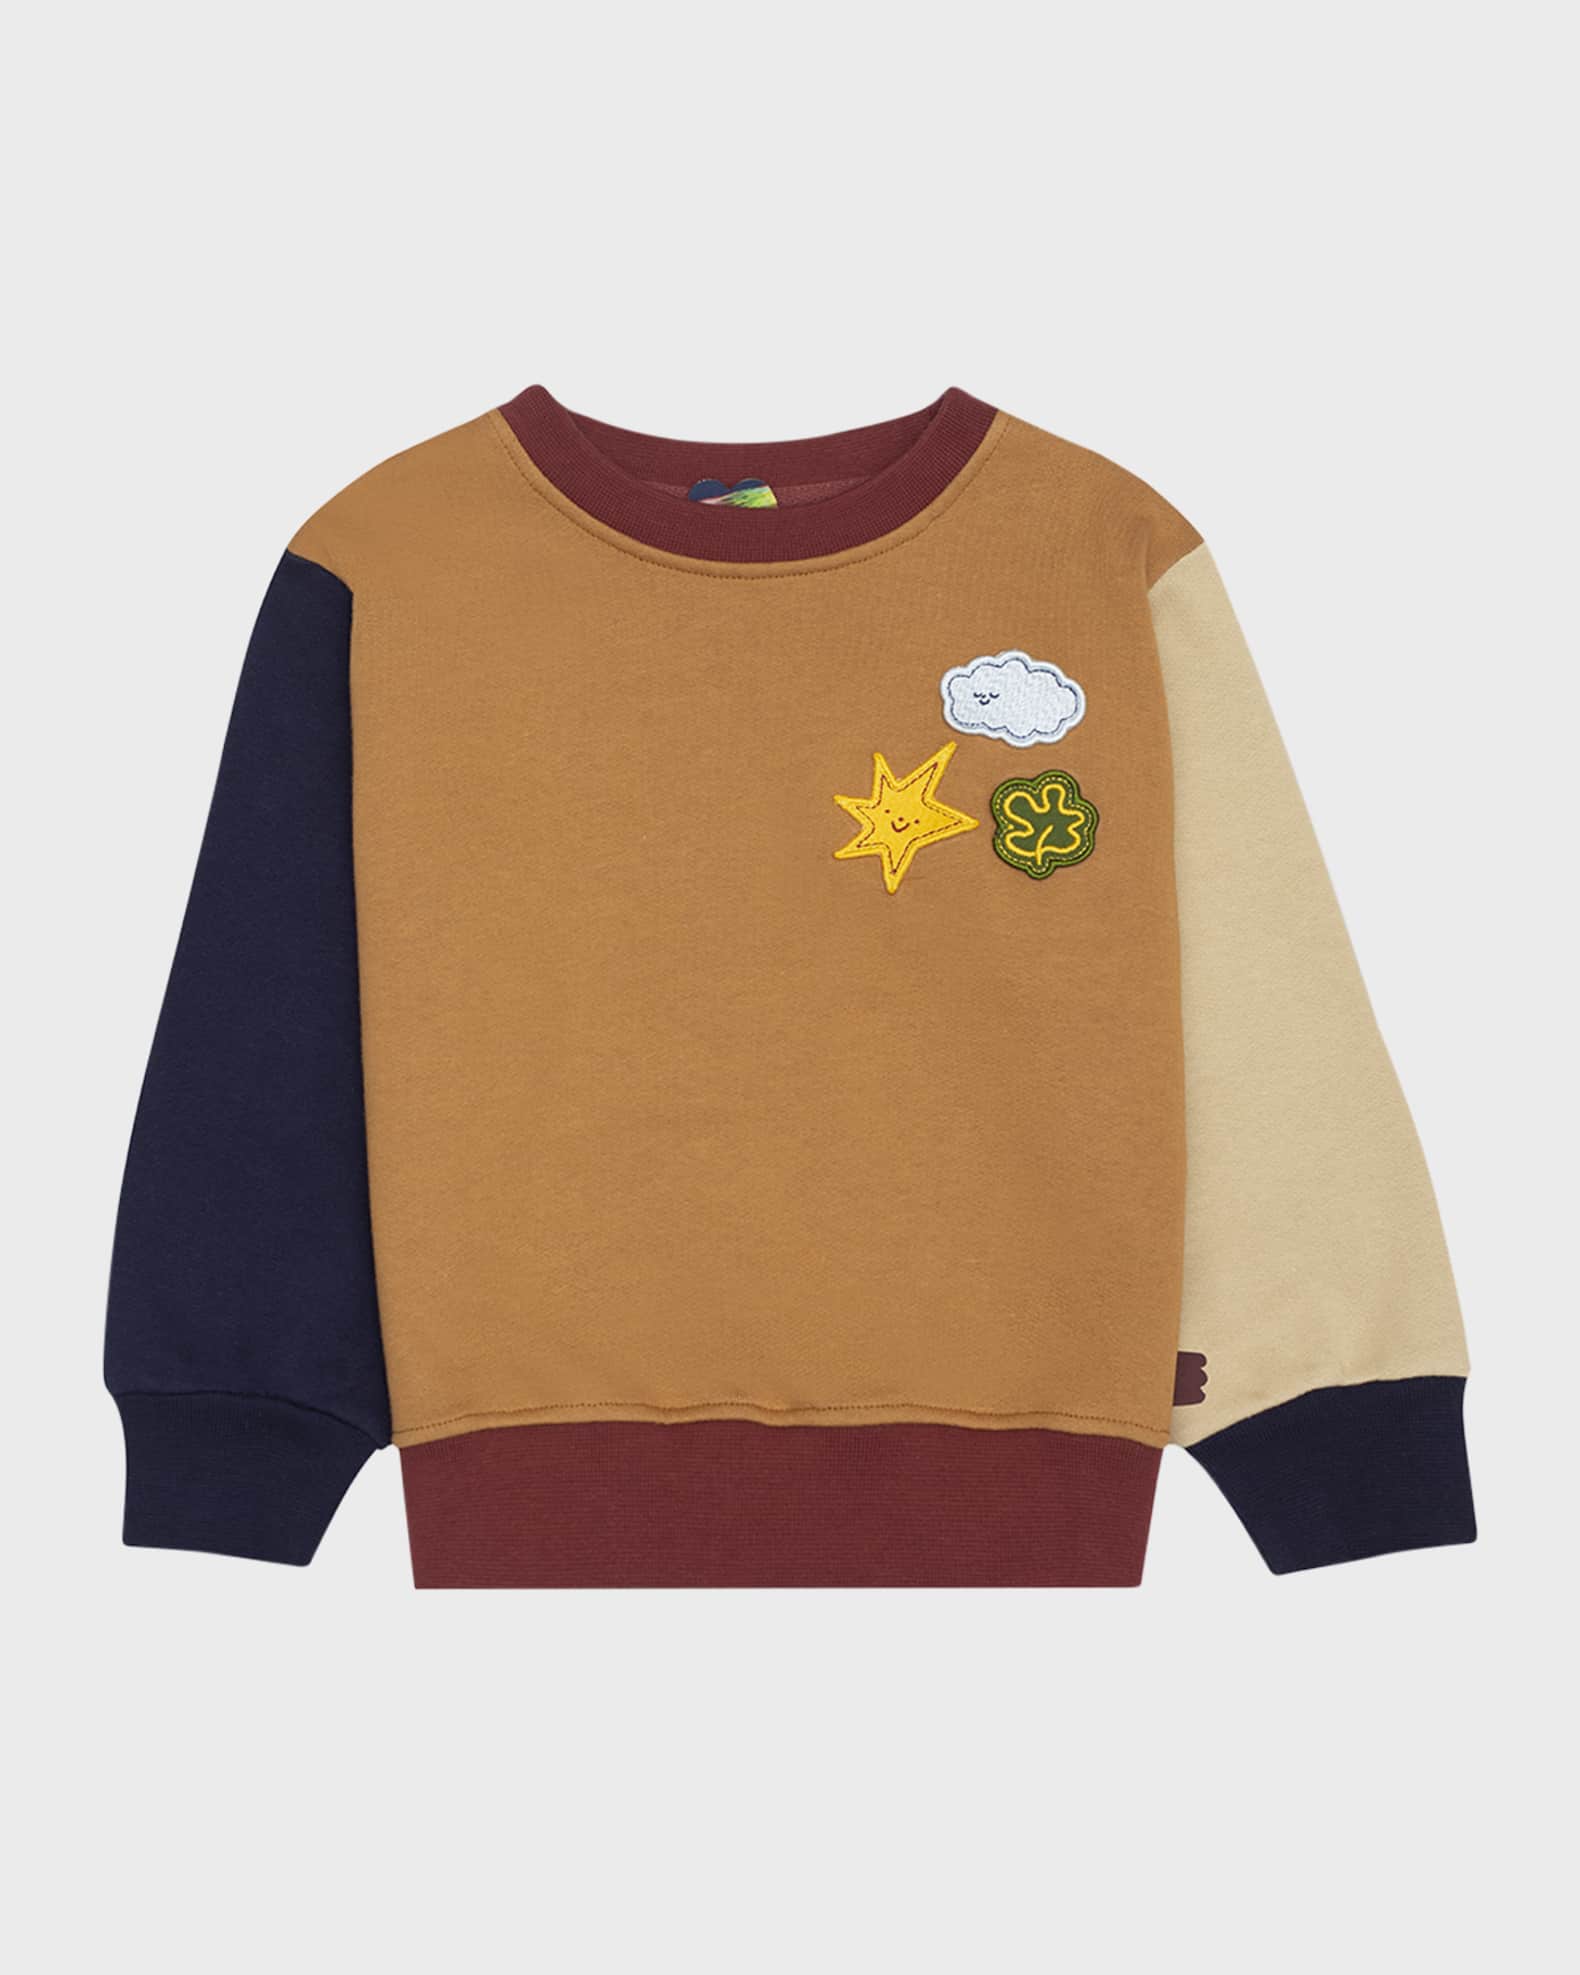 Mon Coeur Boy's Sweatshirt W/ Patches, Size 2-8 | Neiman Marcus